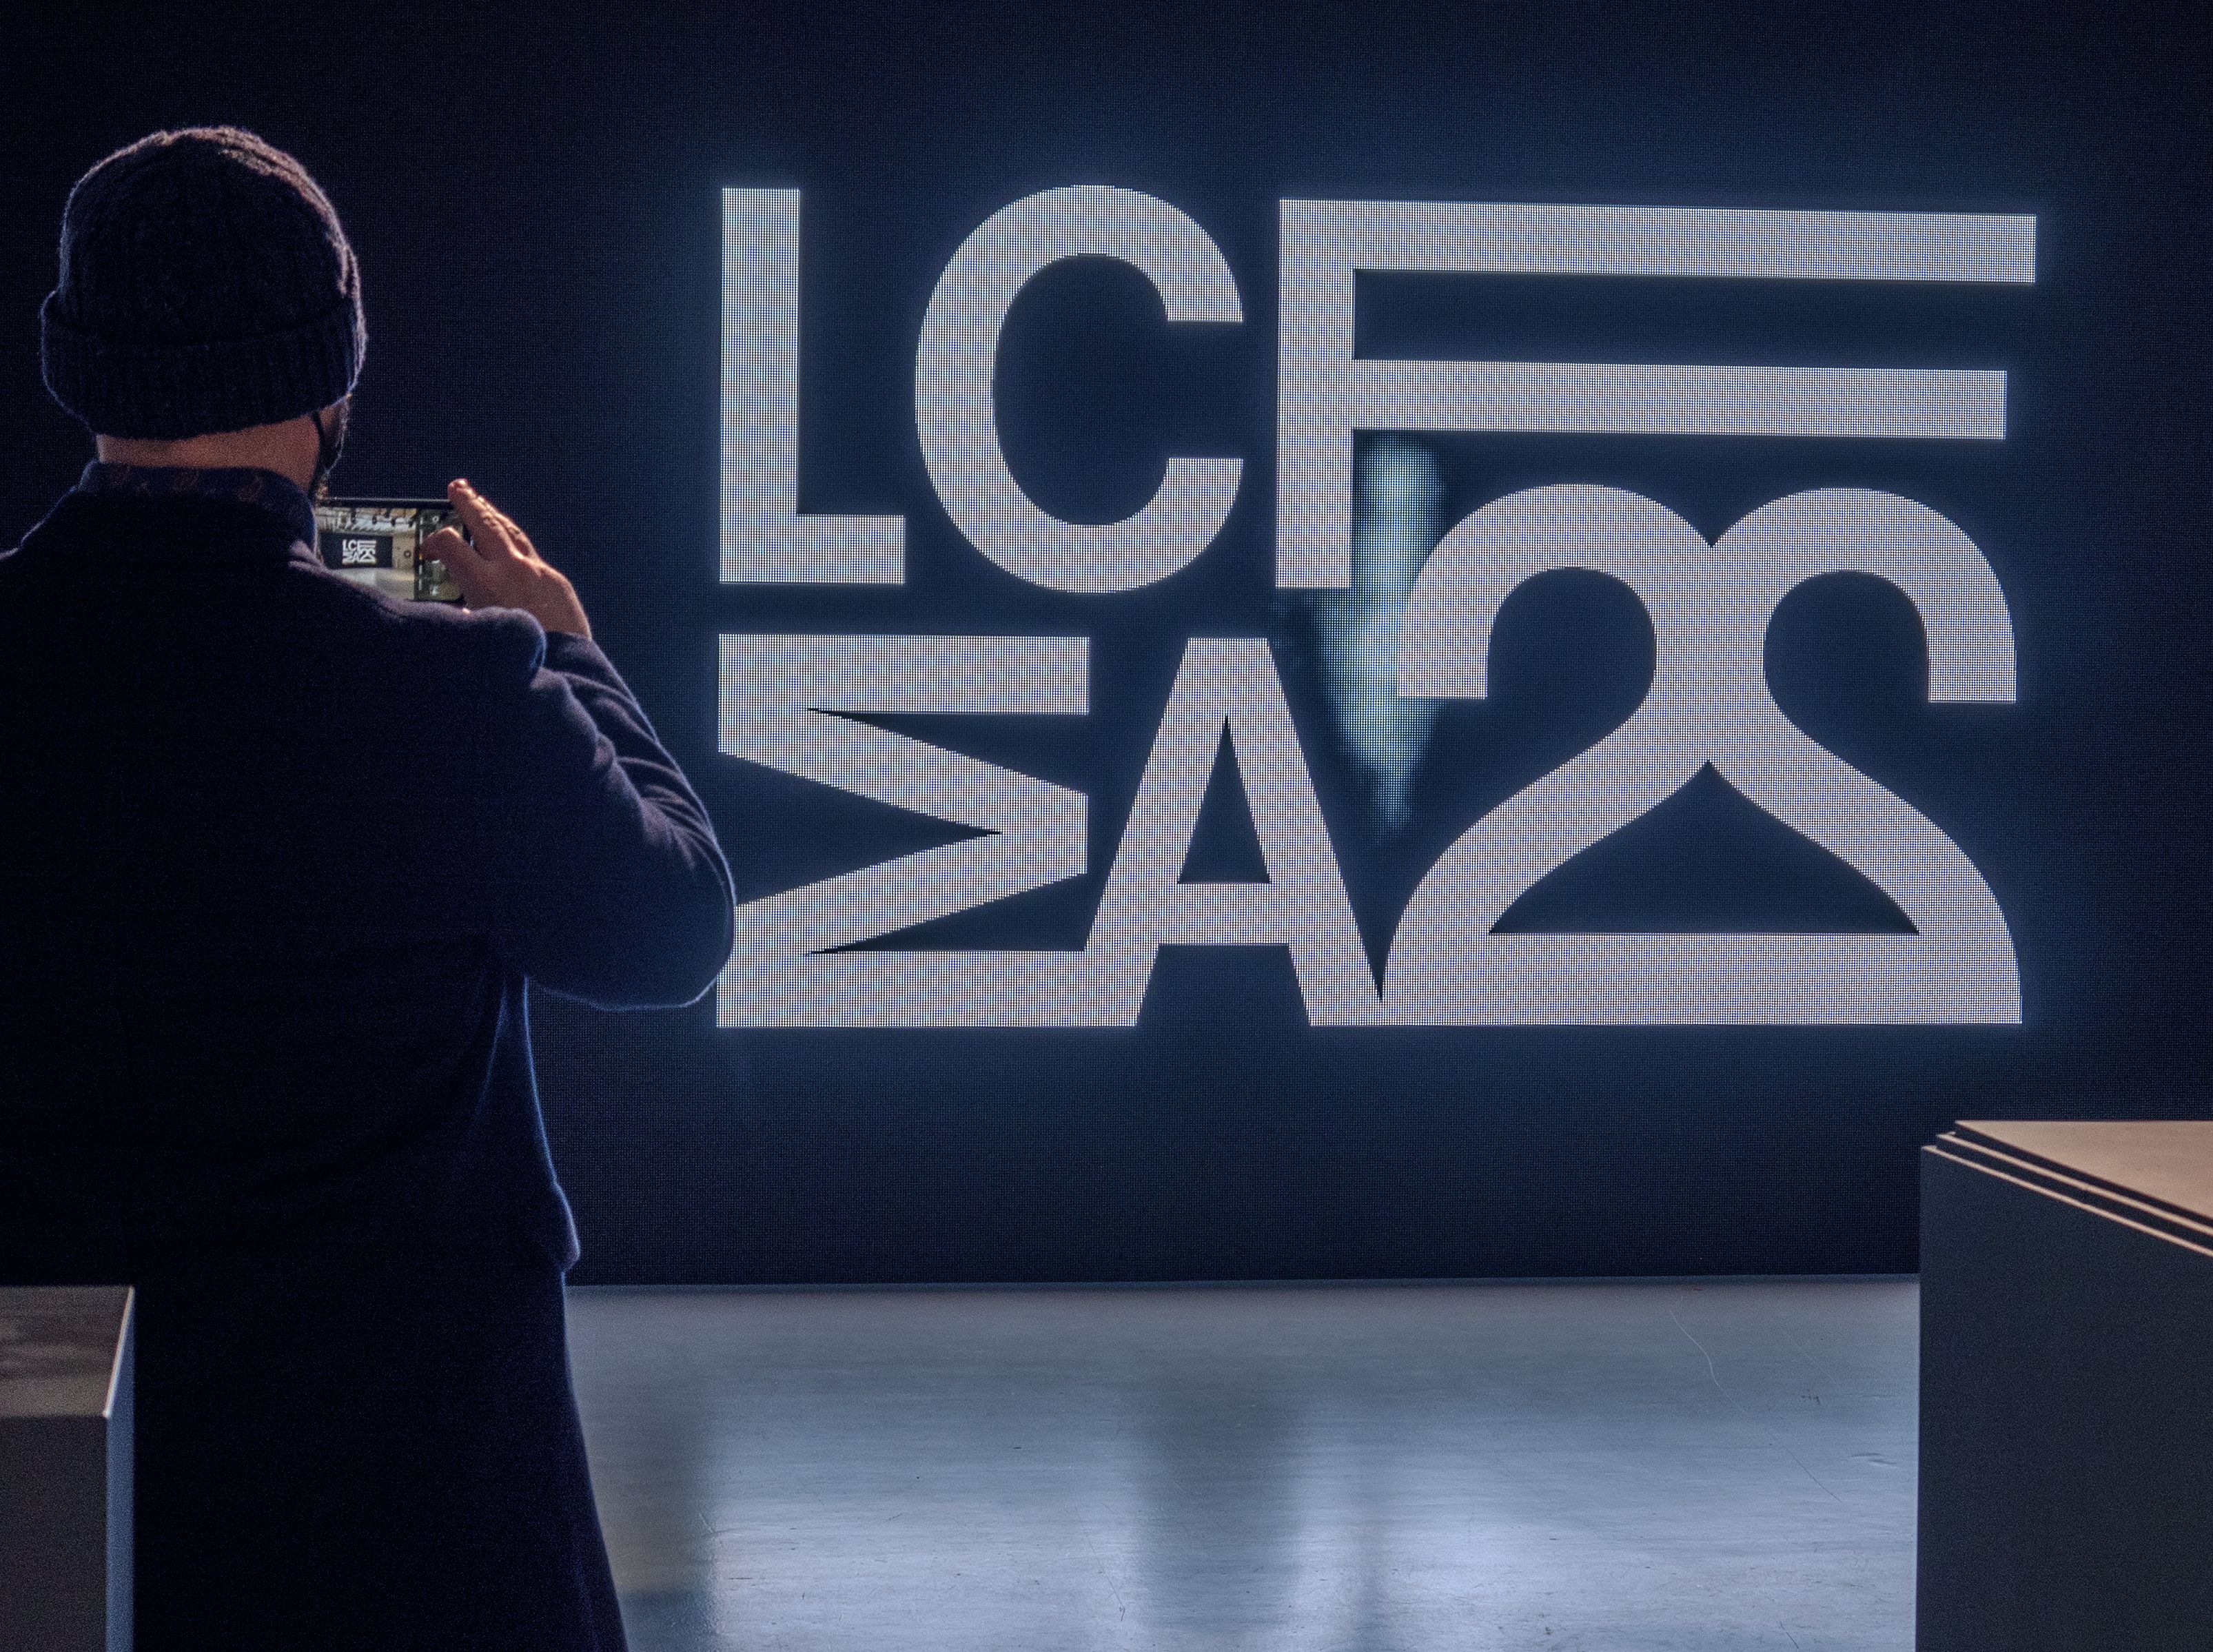 Digital screen of the LCFMA22 logo